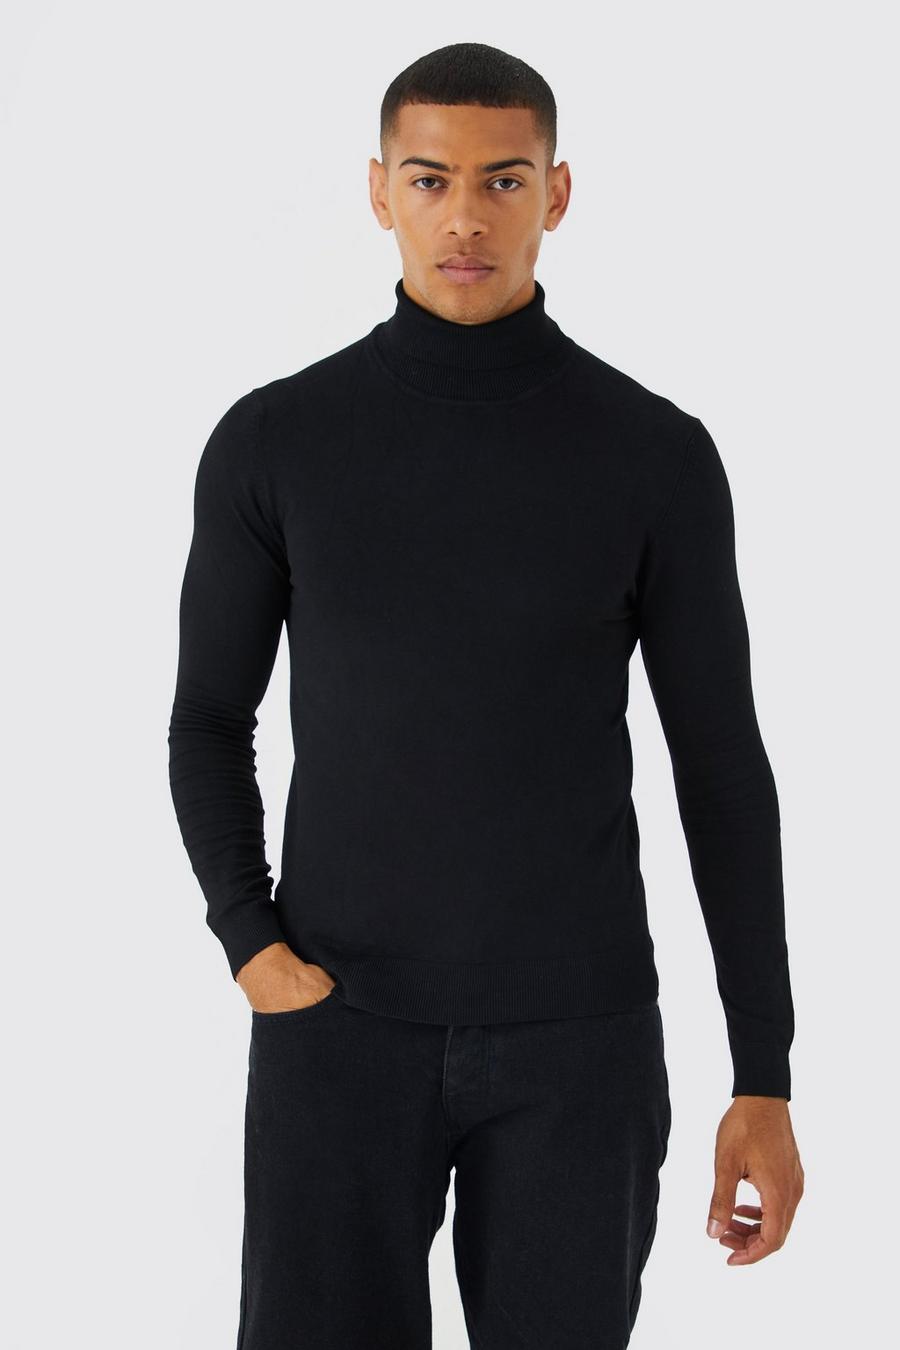 Brand new Men's black jumper with white graphic size S M L & XL ex-high street 